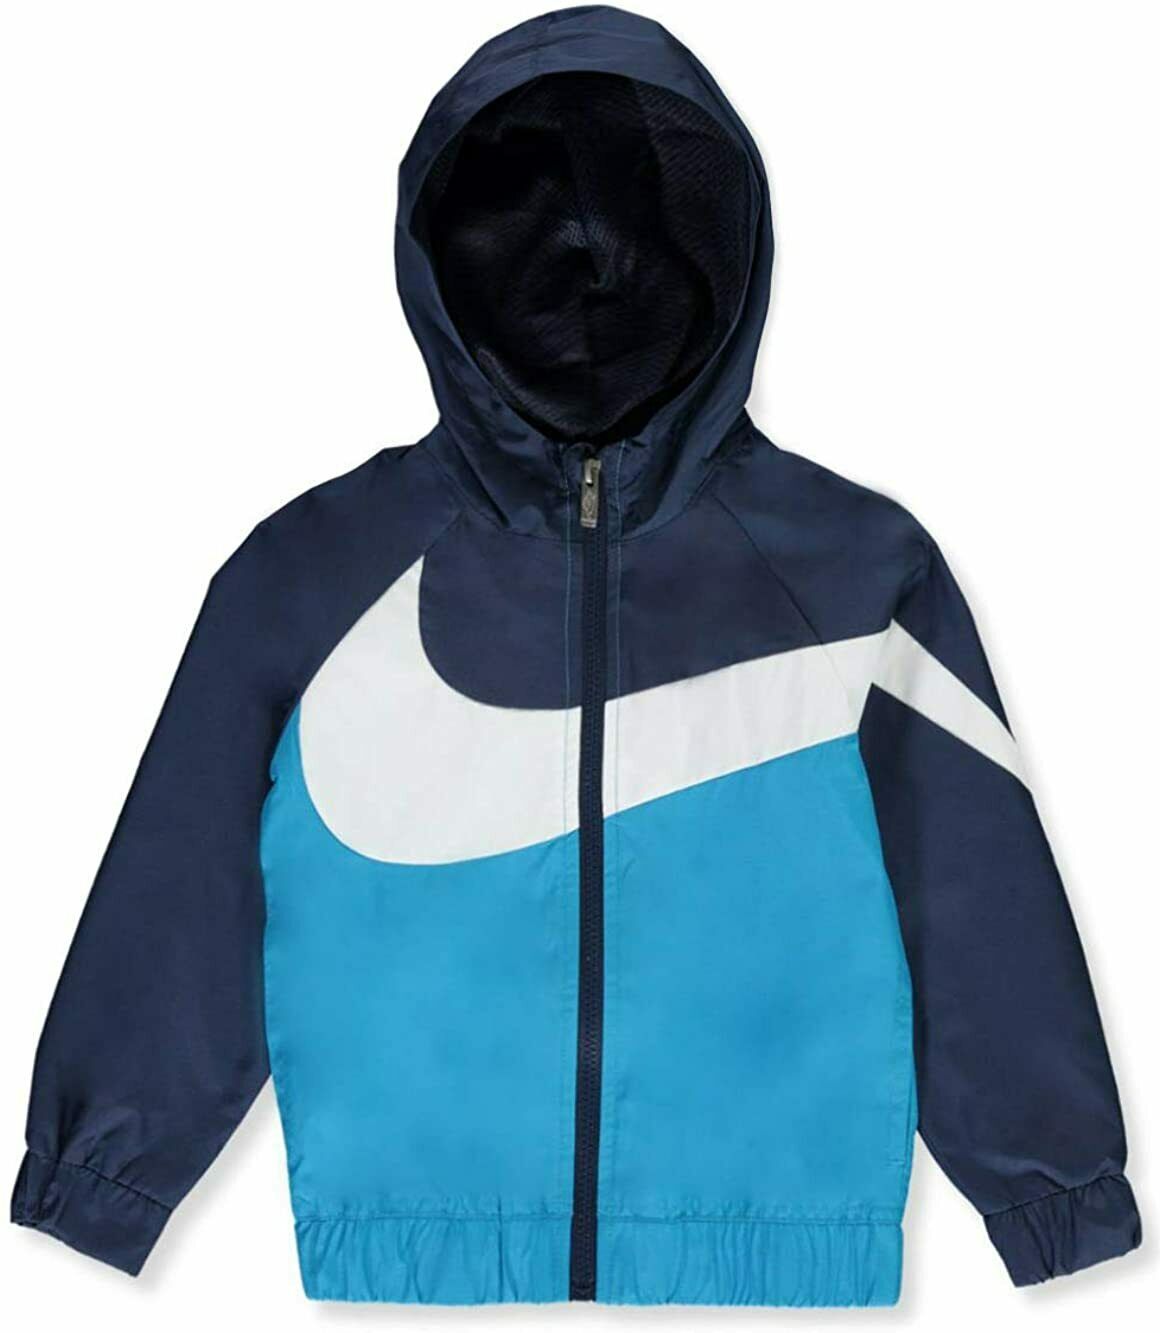 Nike Boys' Color Block Logo Windbreaker Jacket Size 5 (Small) - image 1 of 1